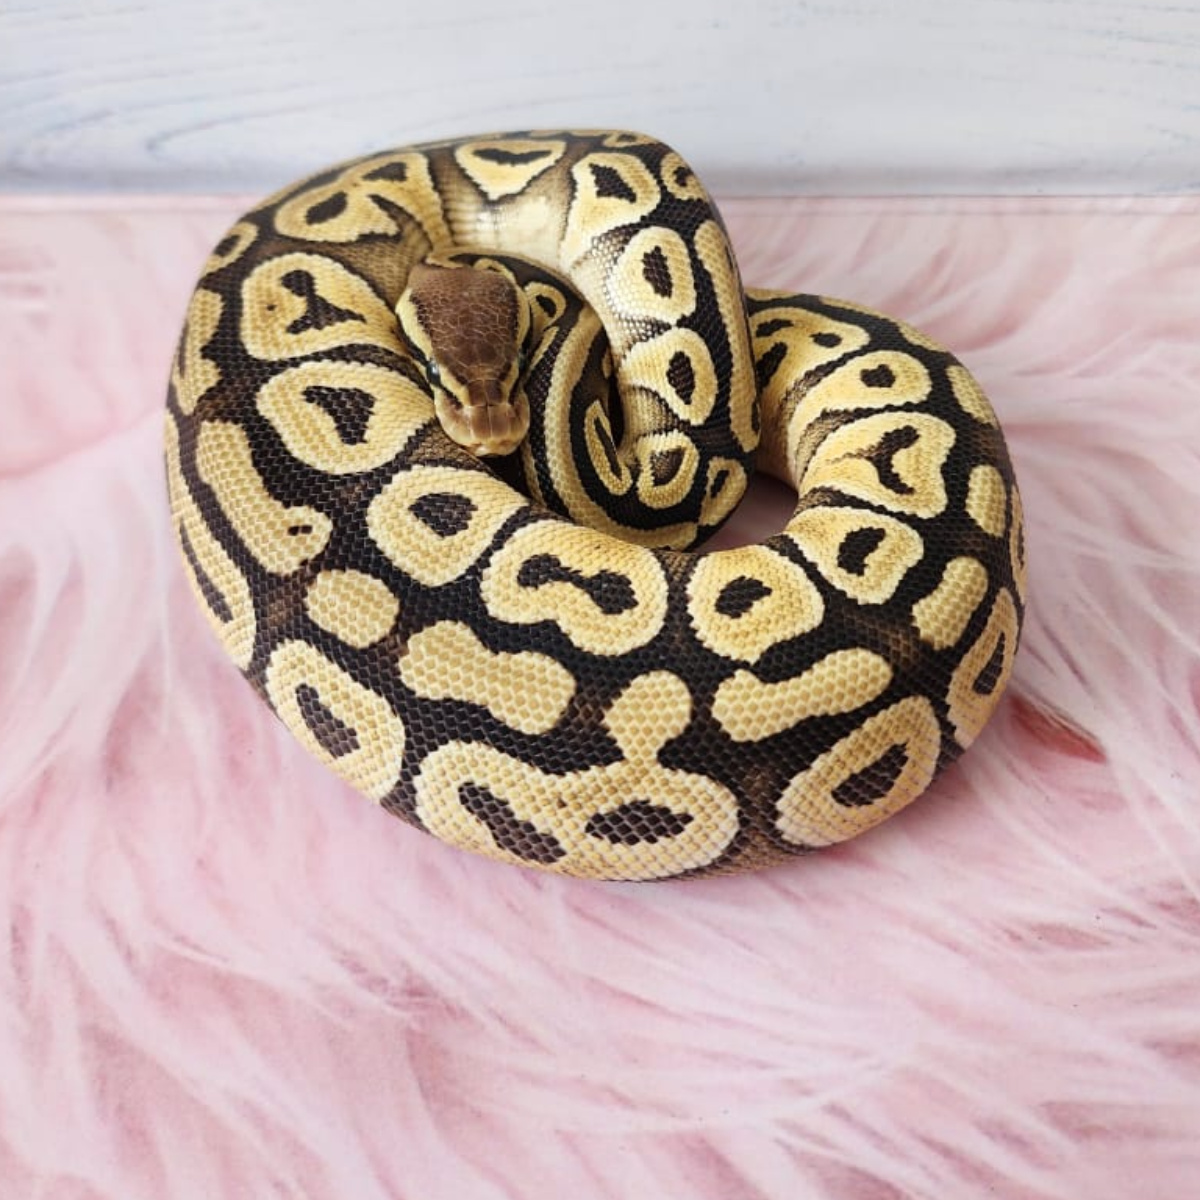 Ball Python Female Pastel